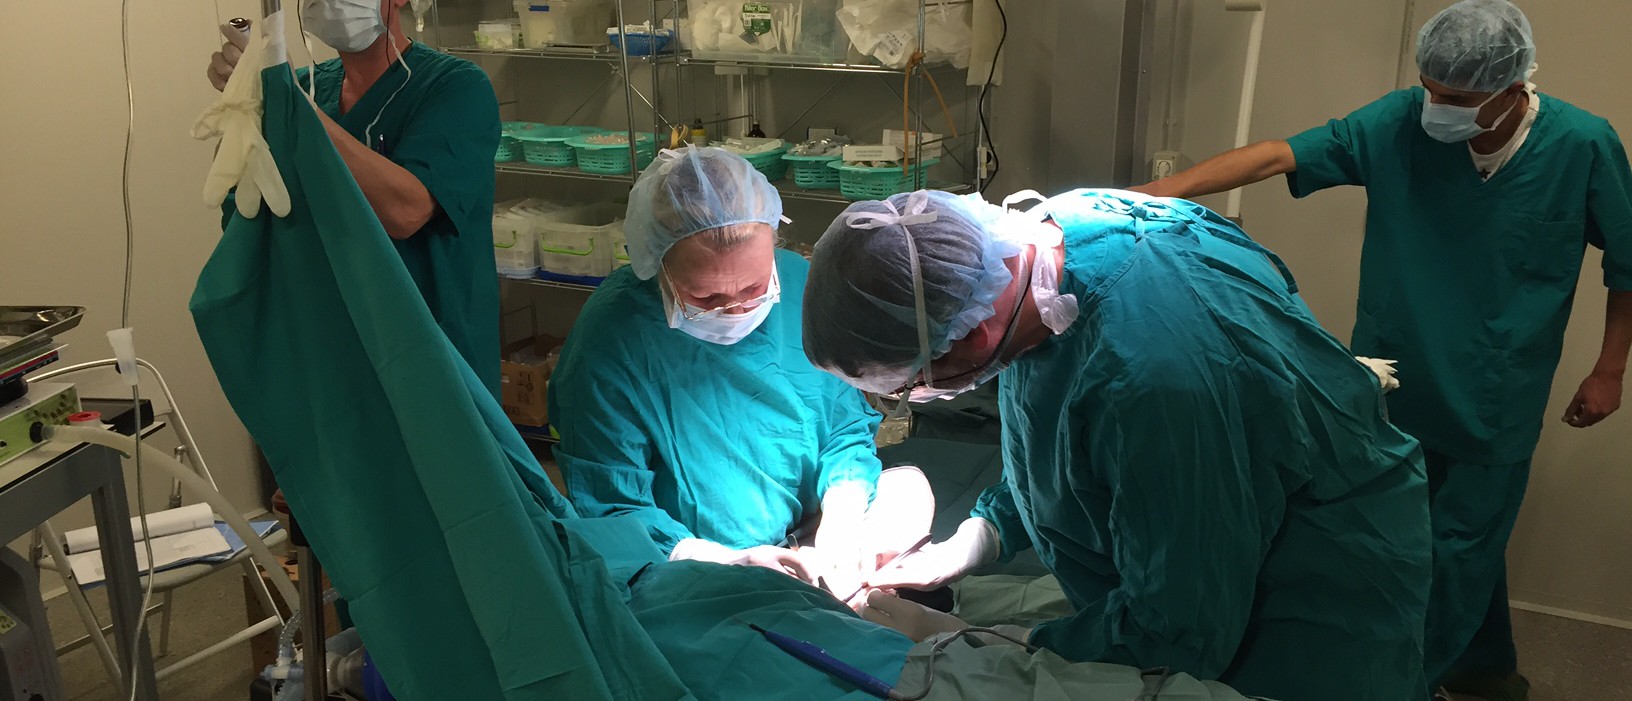 EMERGENCY Surgical Centre in Gernada, Libya